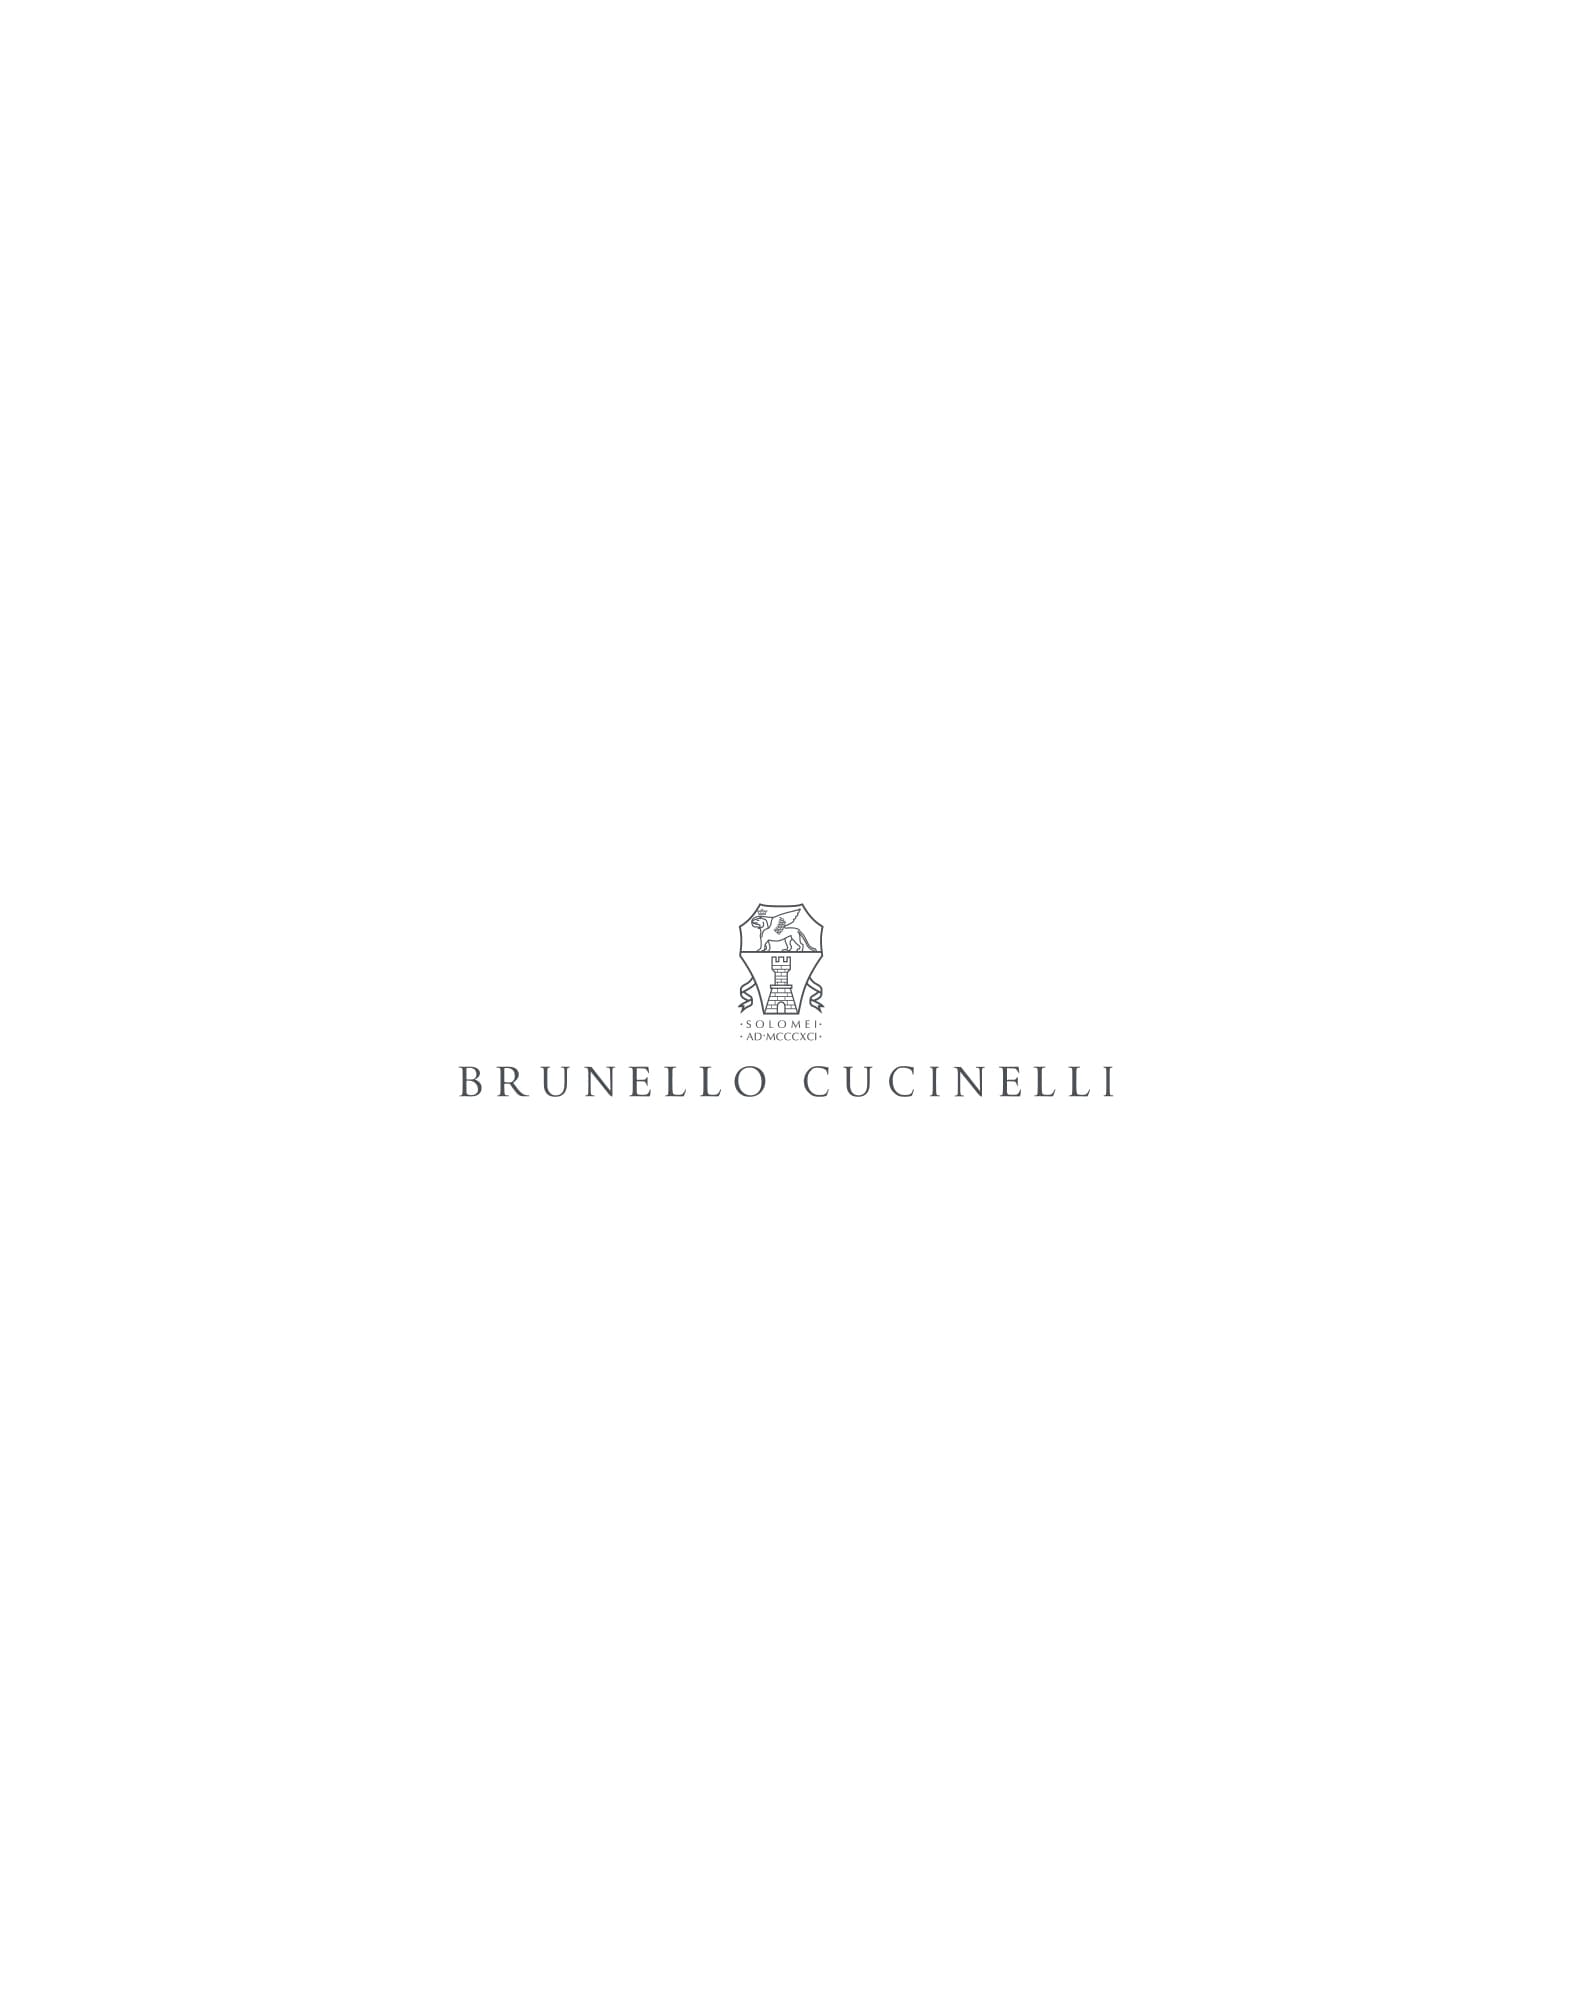 Espadrilles Orange Woman - Brunello Cucinelli 